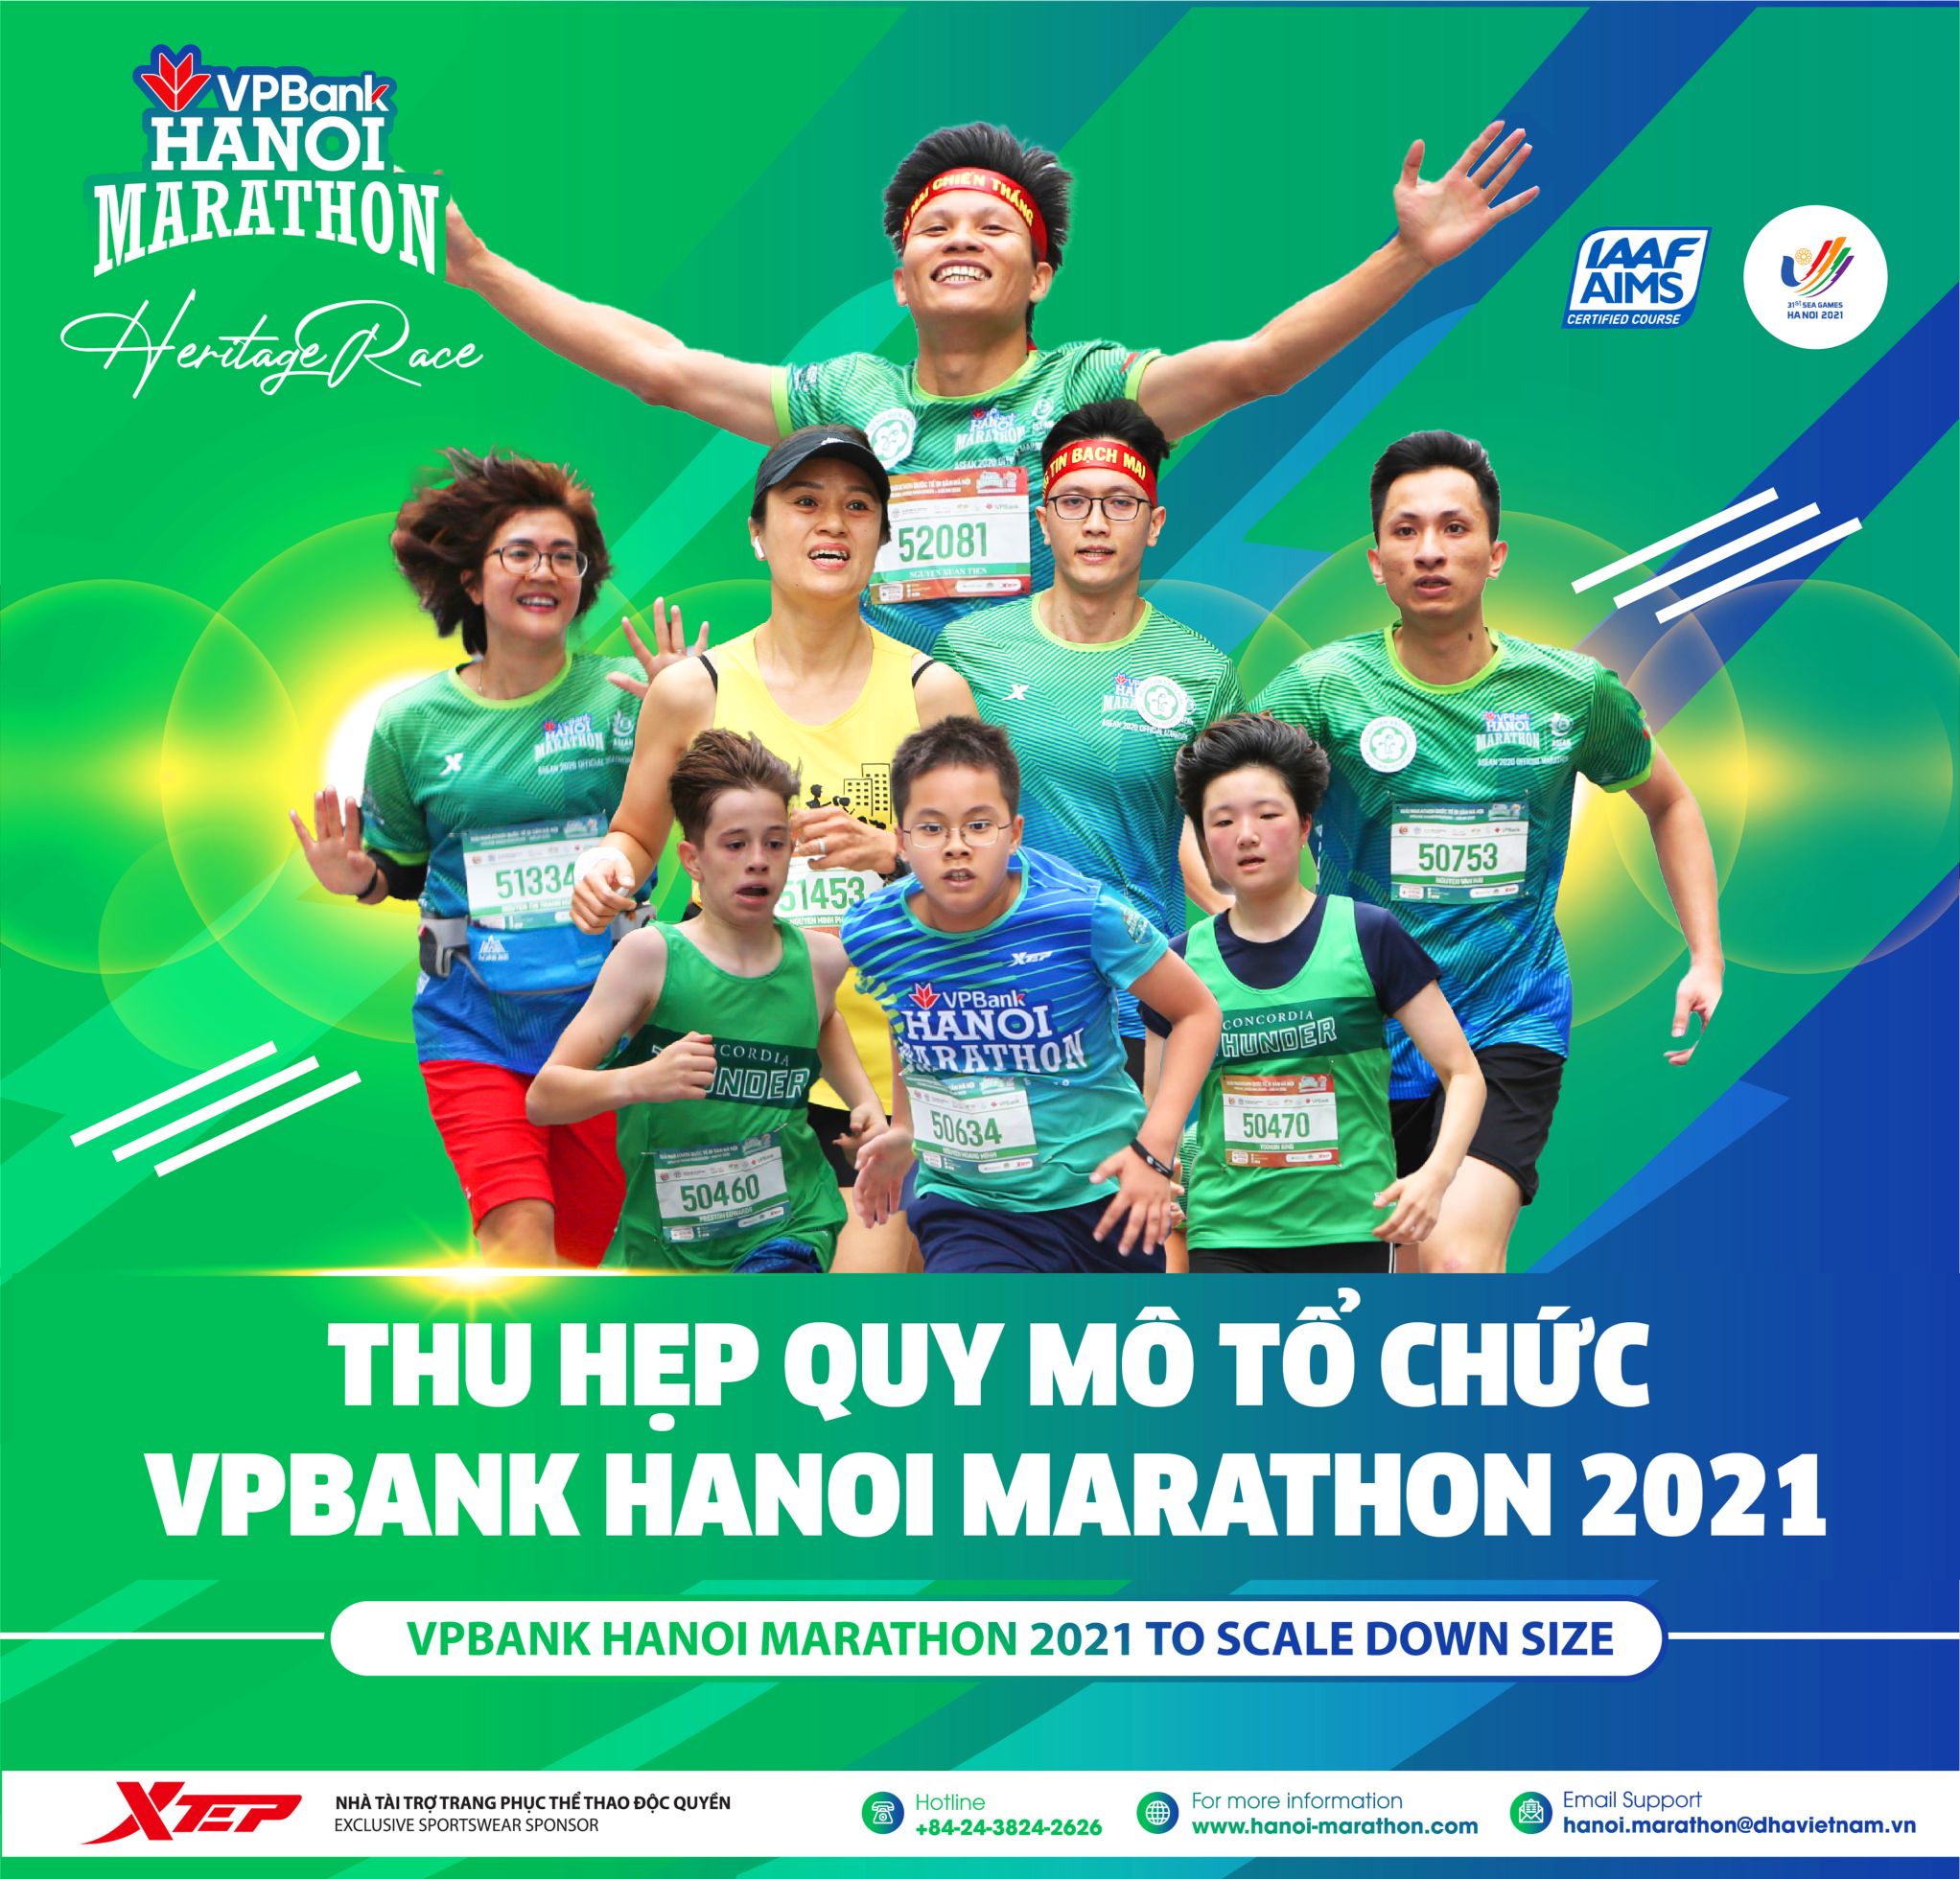 NEWS RELEASE: VPBank Hanoi Marathon 2021 Announces New Organization Plan